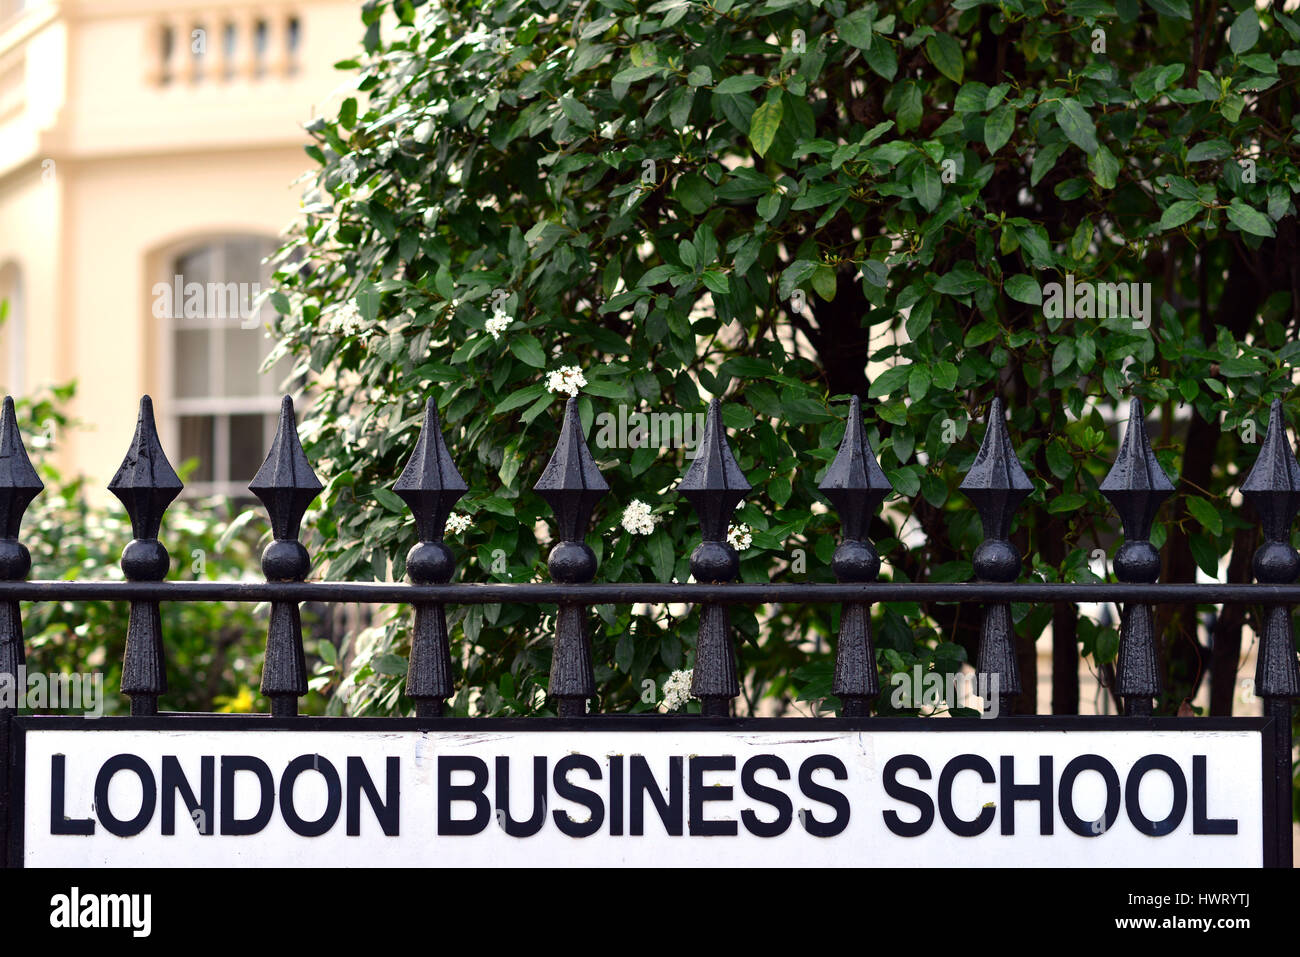 London Business School street sign Stock Photo